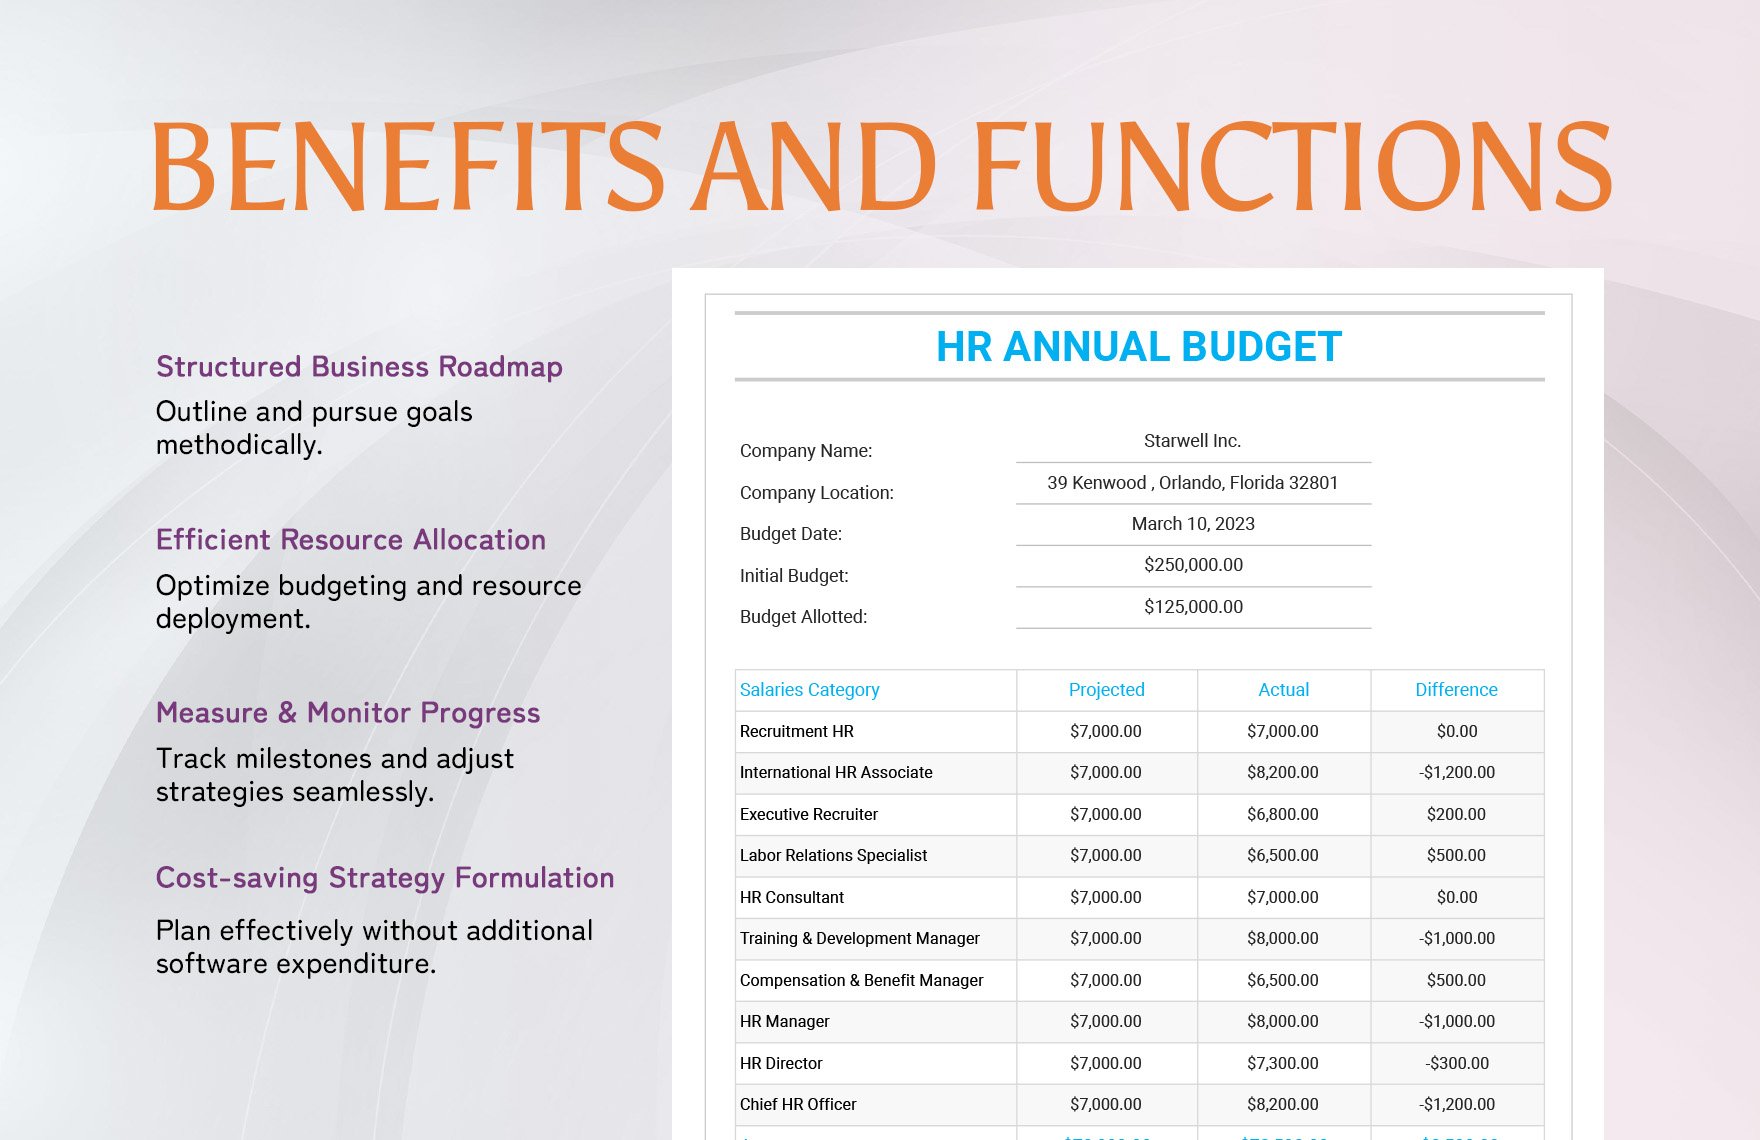 HR Annual Budget Template